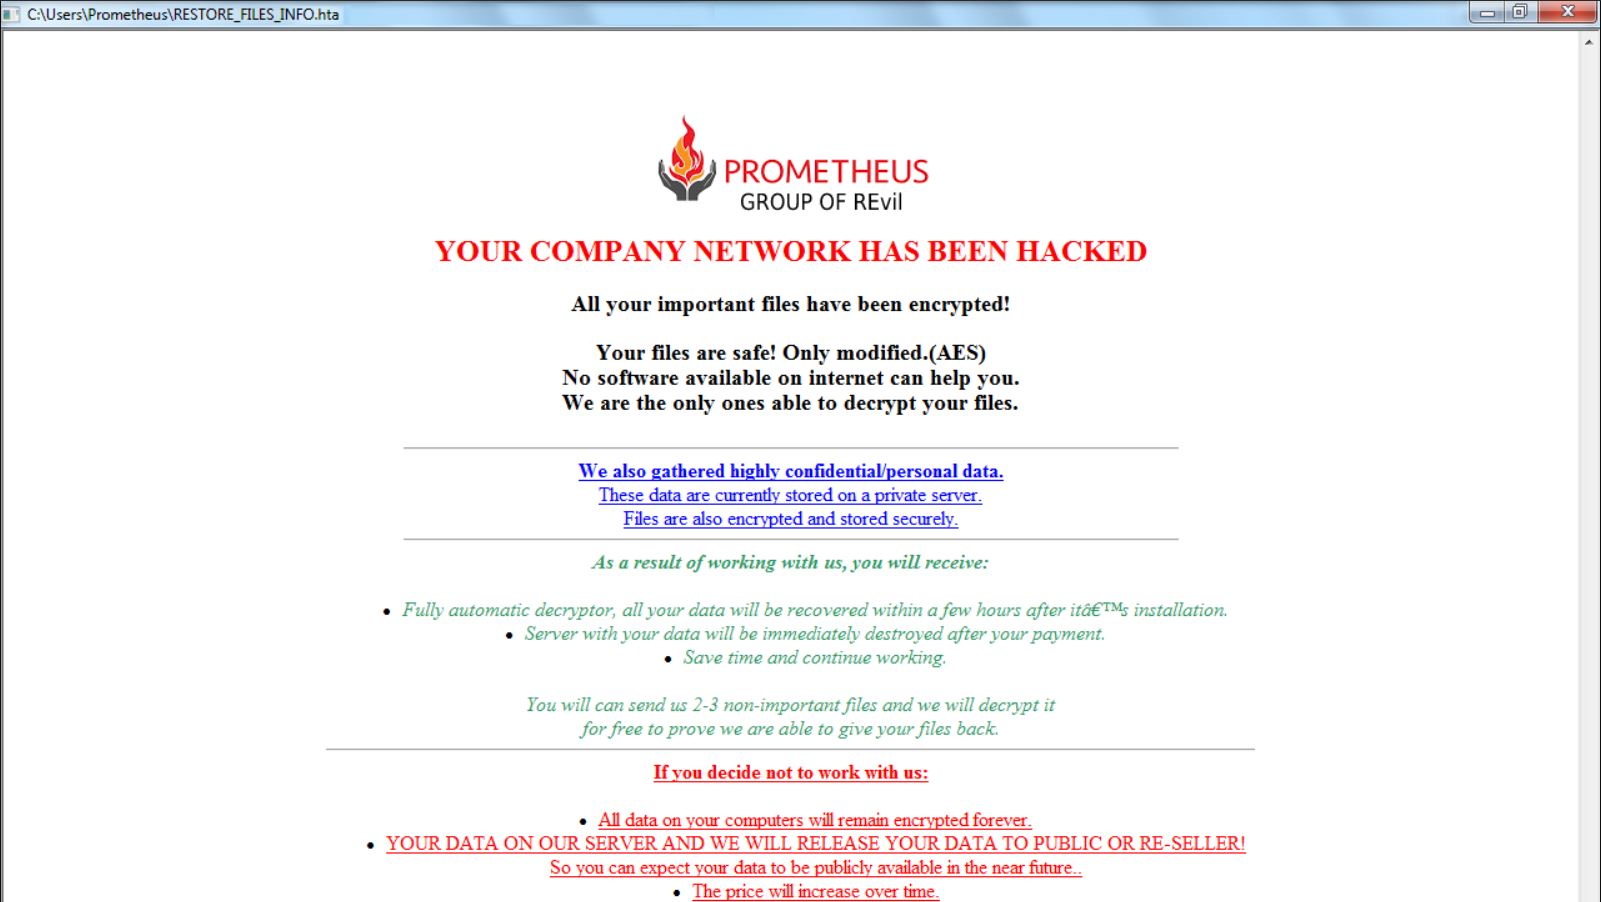 prometheus ransomware restore files info hta ransom note